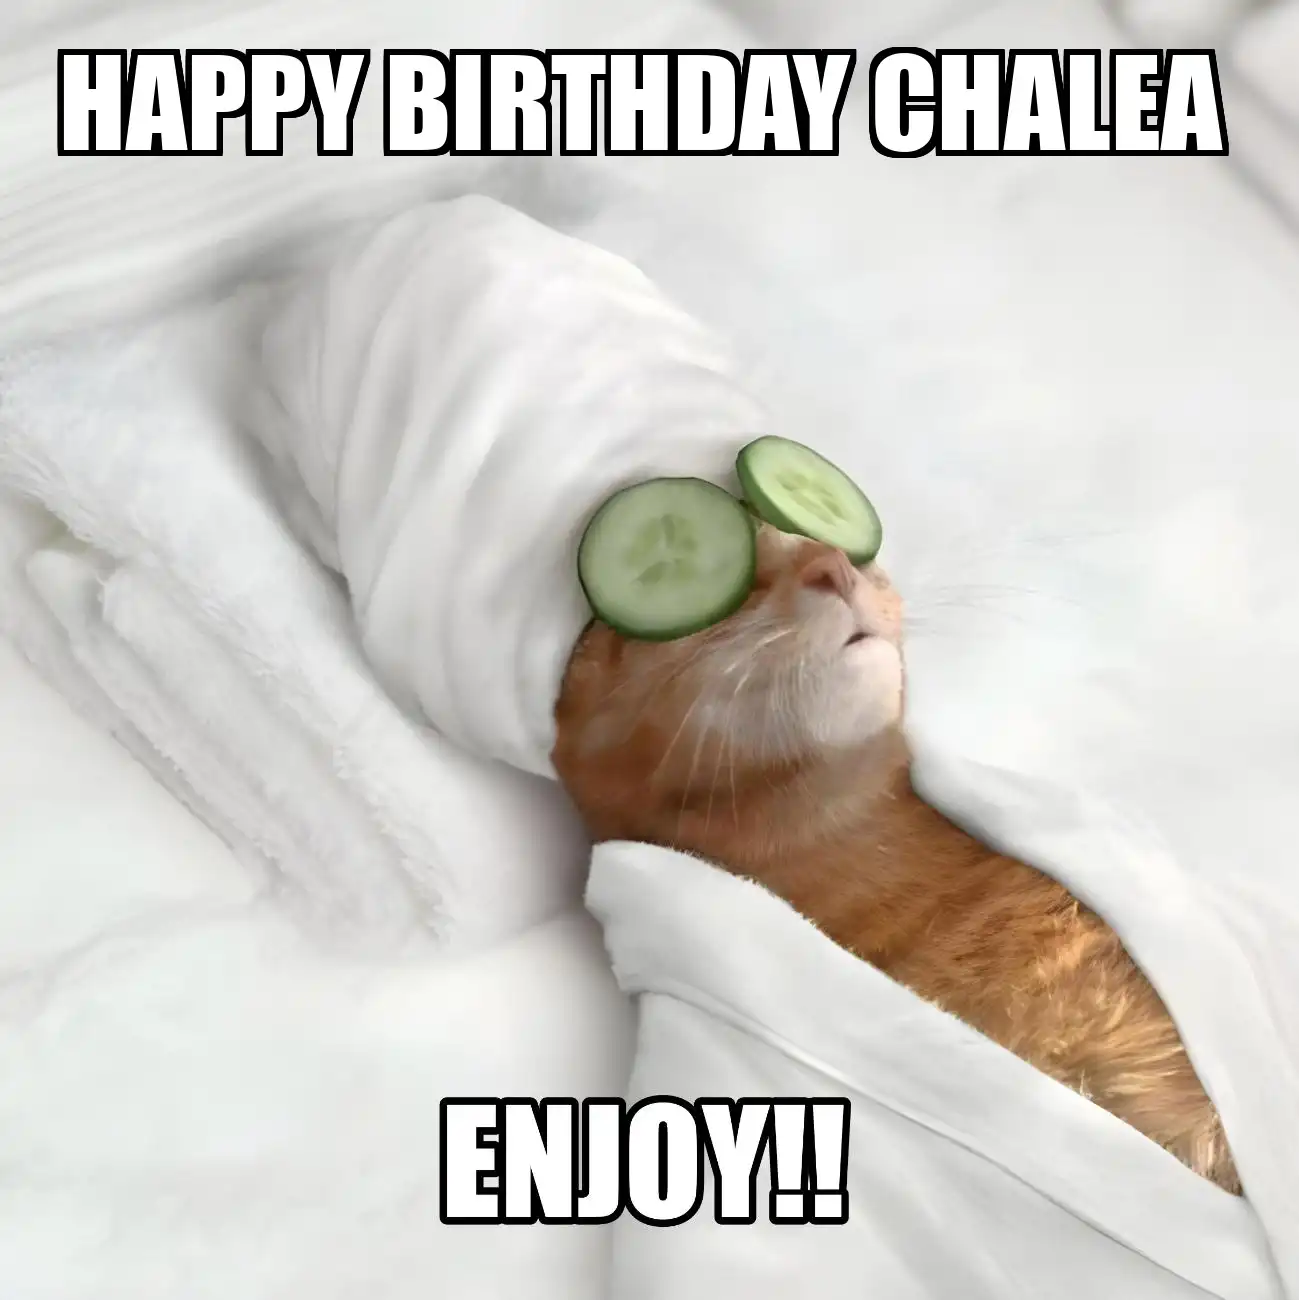 Happy Birthday Chalea Enjoy Cat Meme